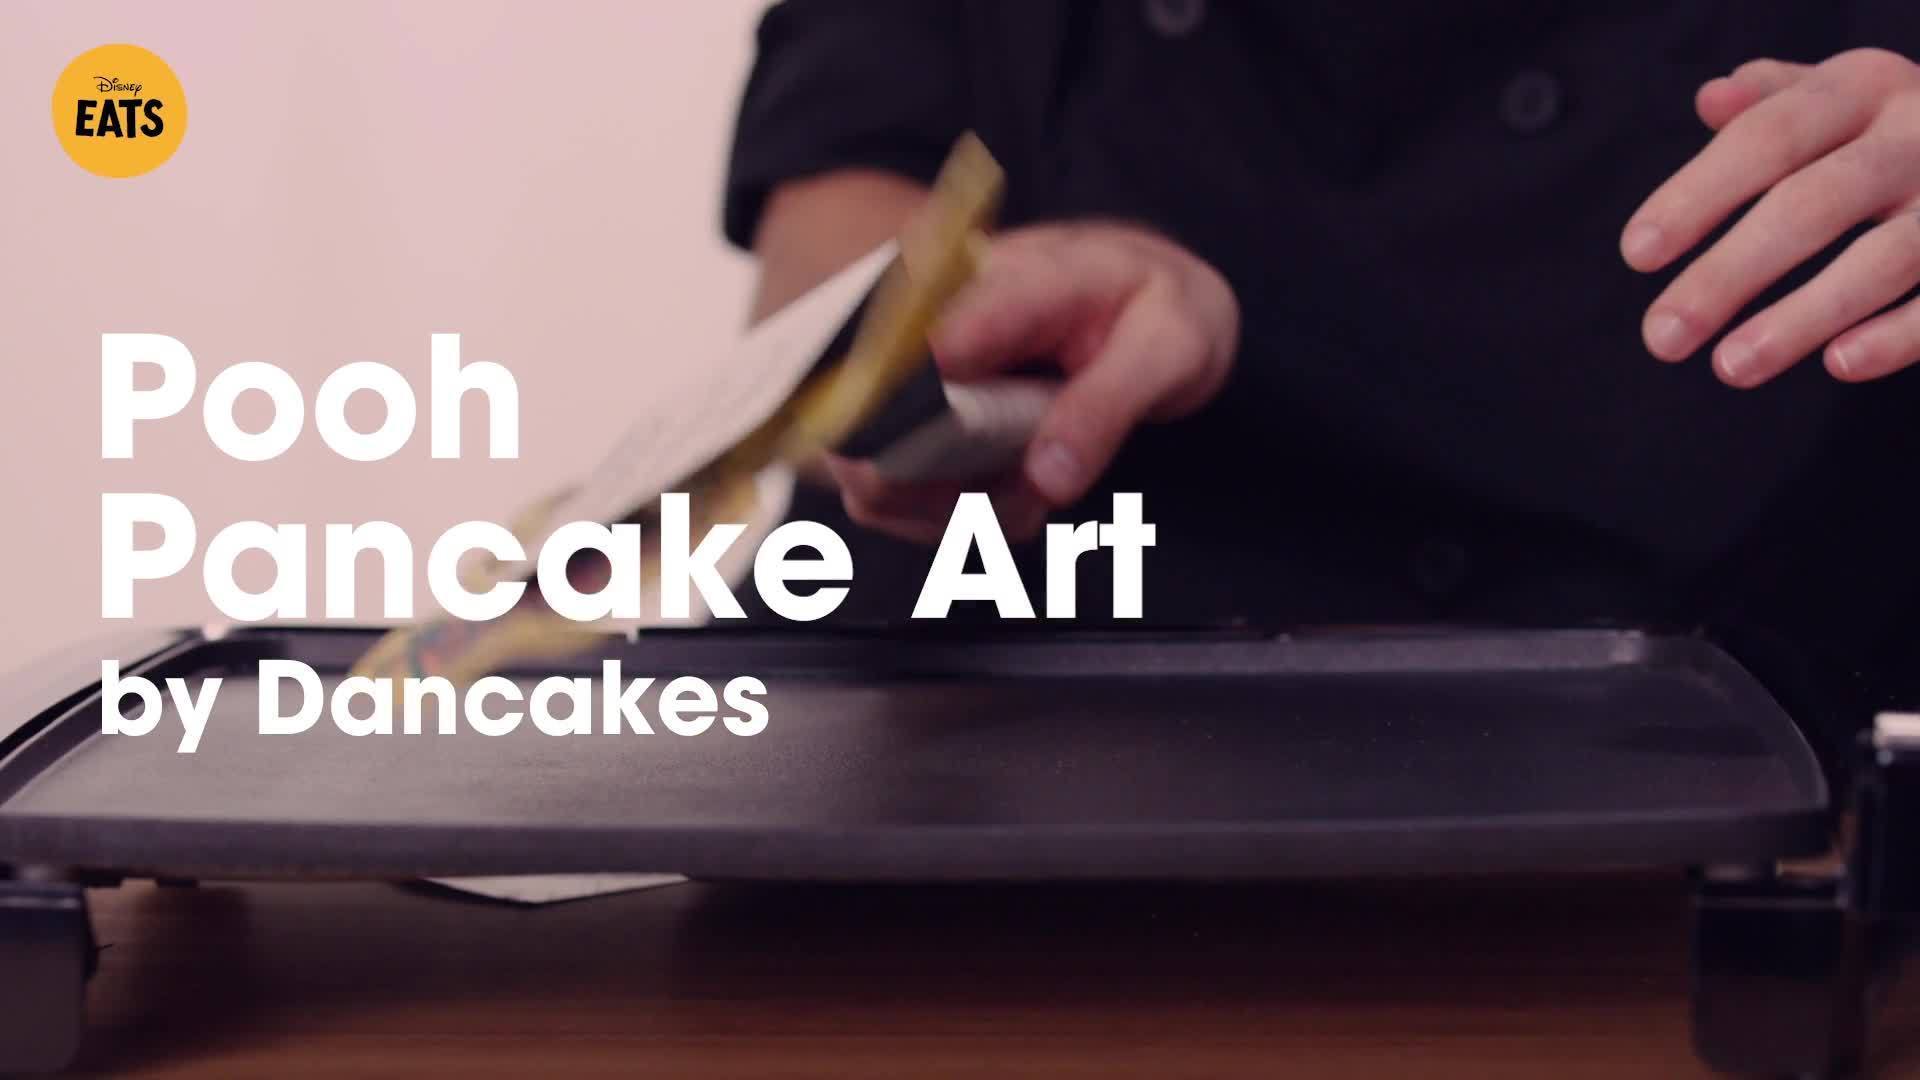 Dancakes, Winnie the Pooh Pancake Art | Disney Eats